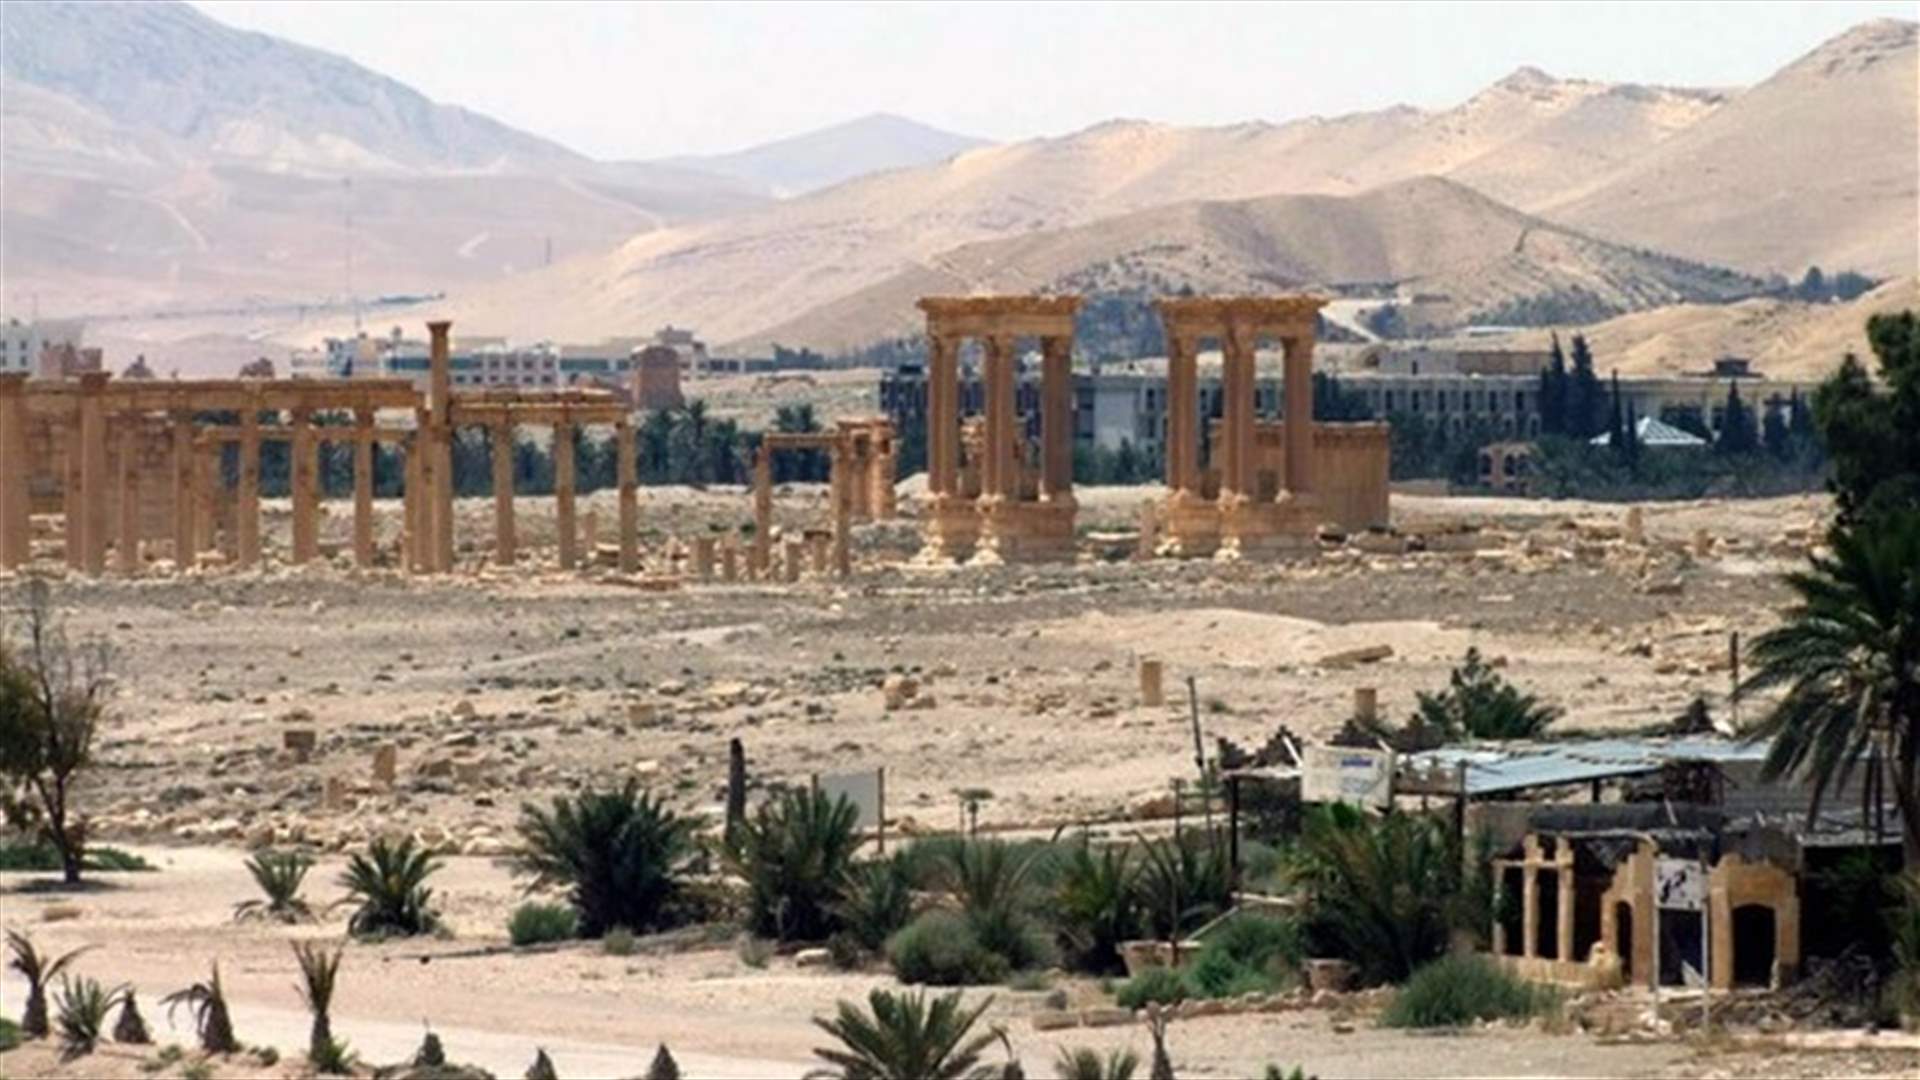 Islamic State kills 12 in Palmyra, among them teachers, soldiers - monitor